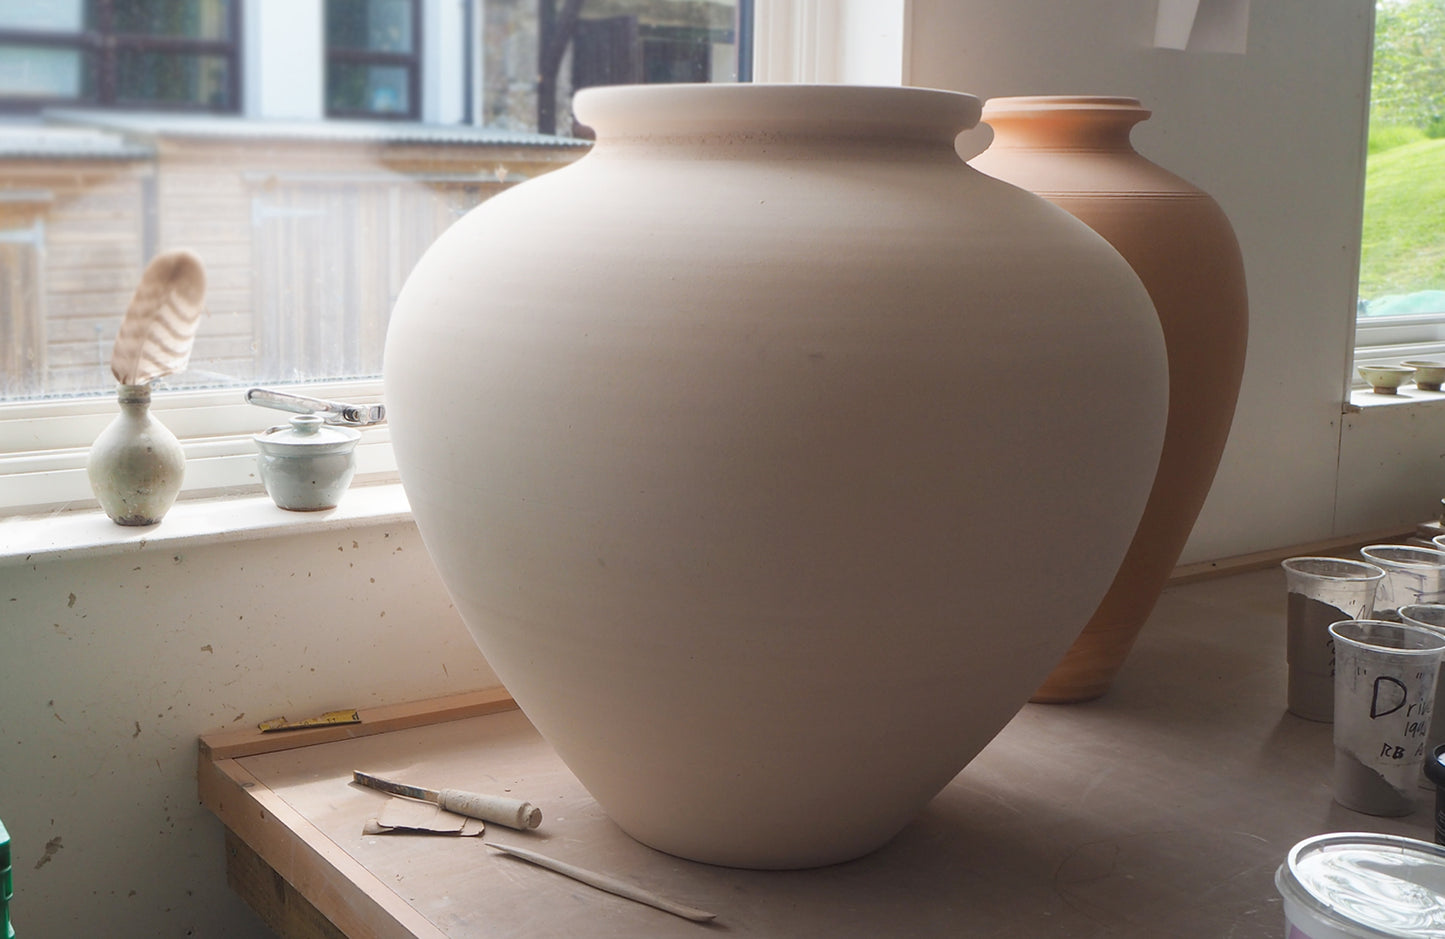 Porcelain Tea Bowl by Charlie Collier